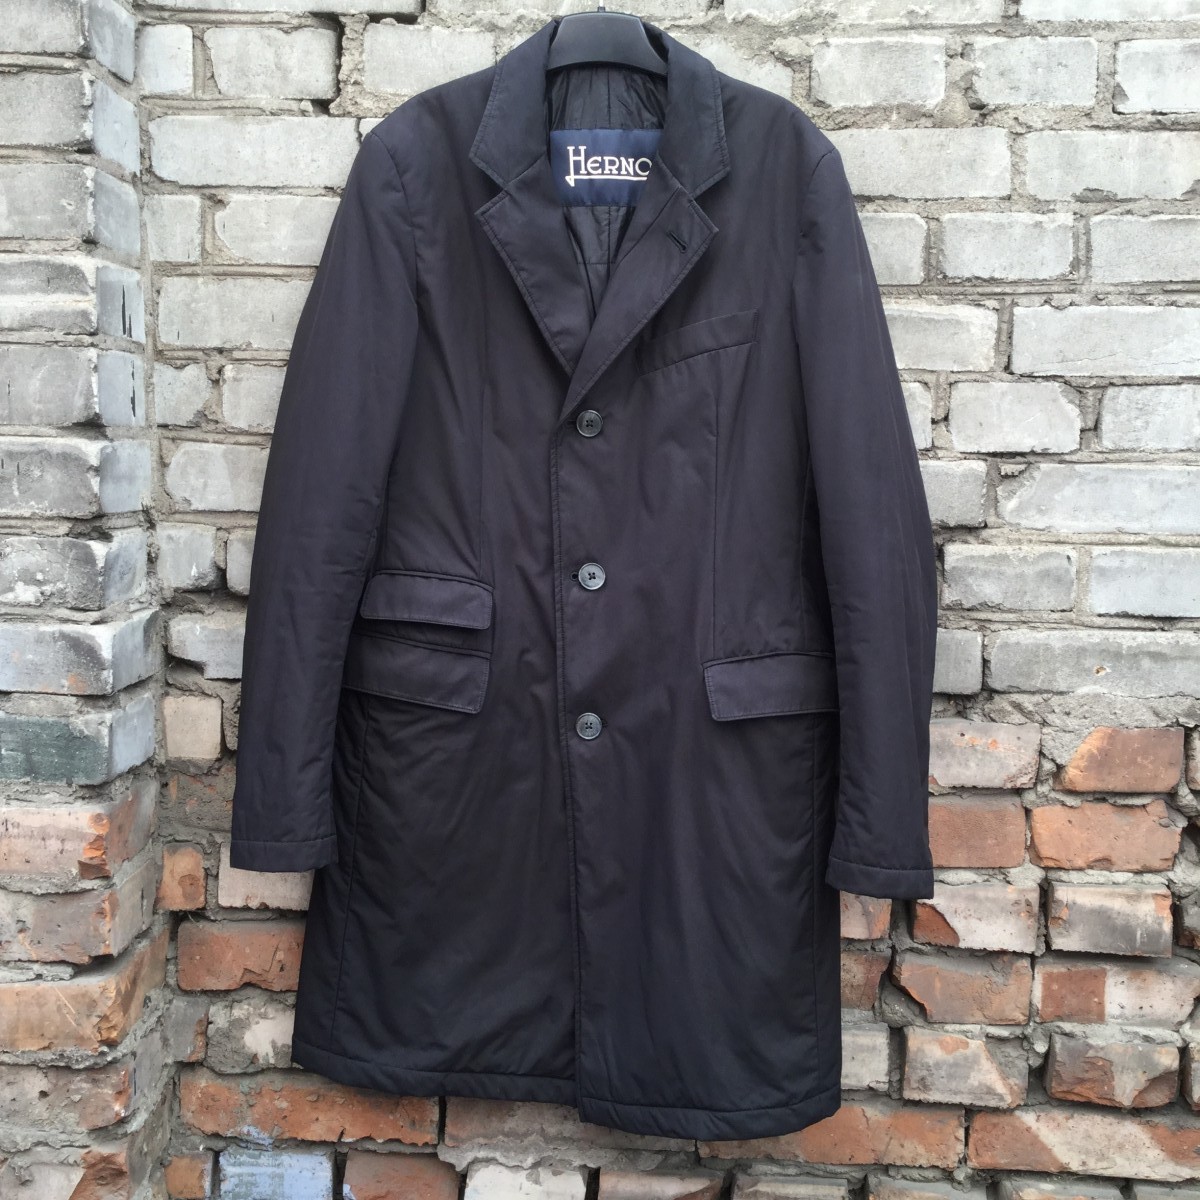 Black trench coat.Like Saint Laurent or Dior - 2